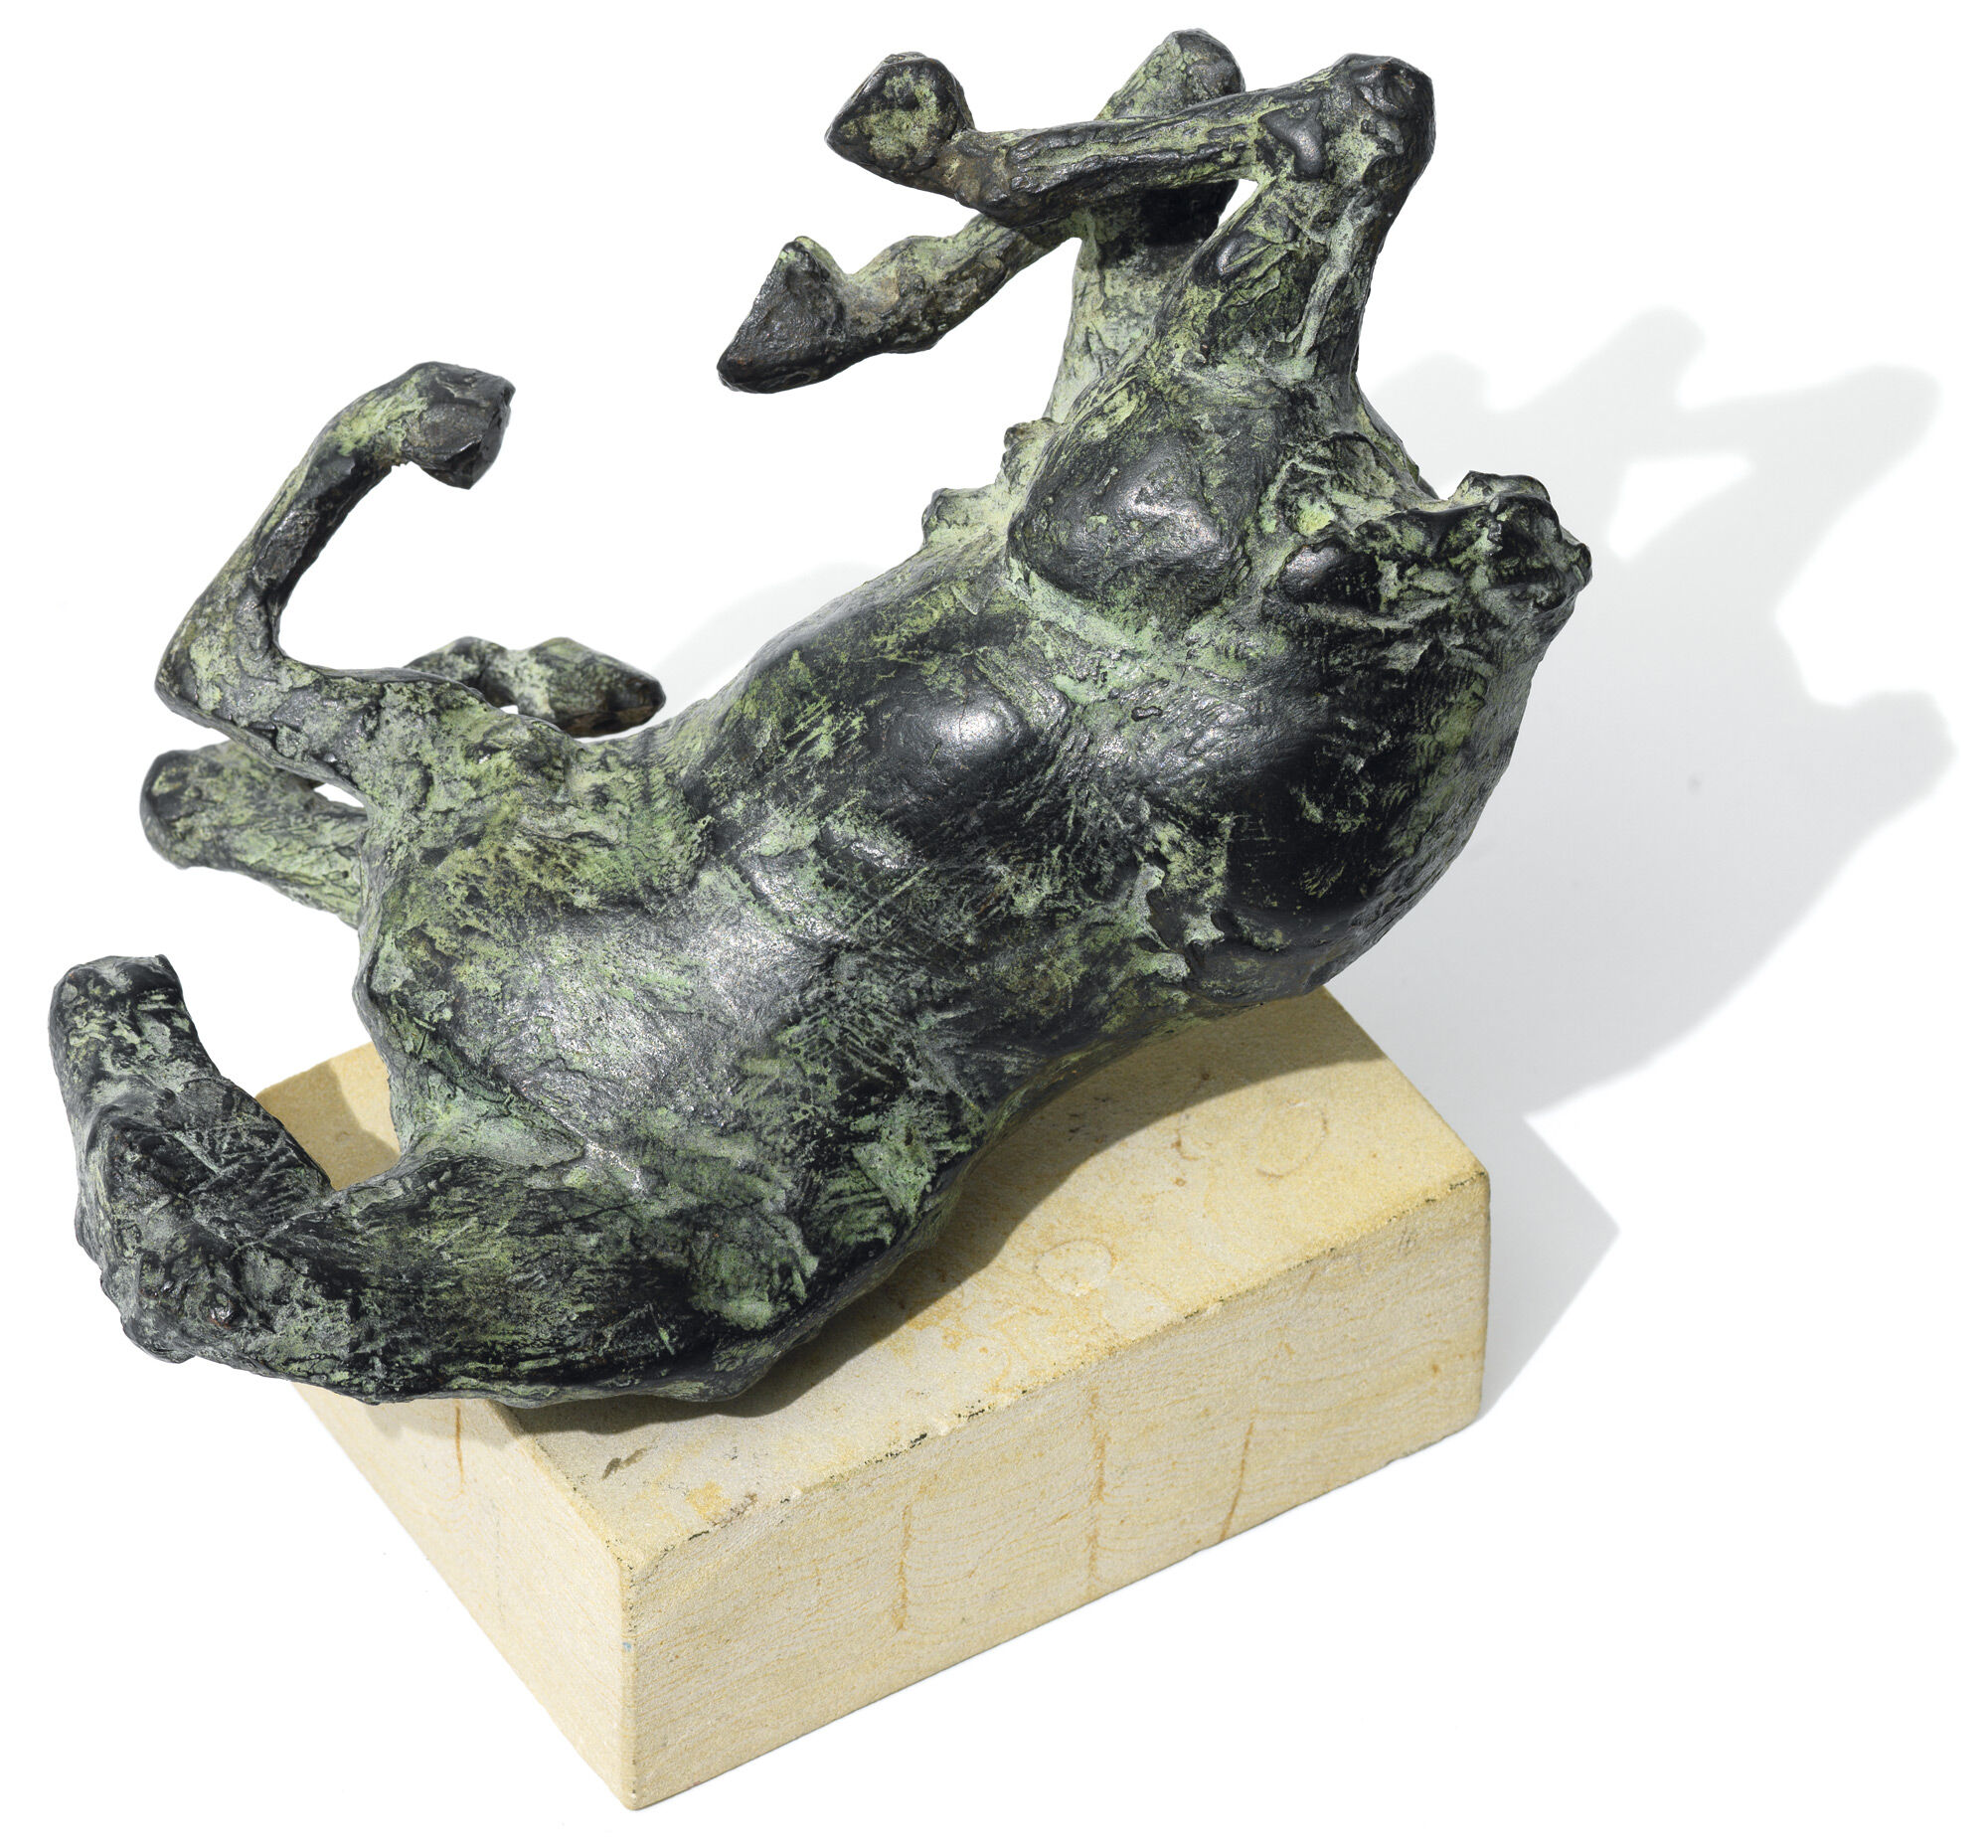 Sculpture "Rolling Horse" (1997), bronze by Thomas Jastram